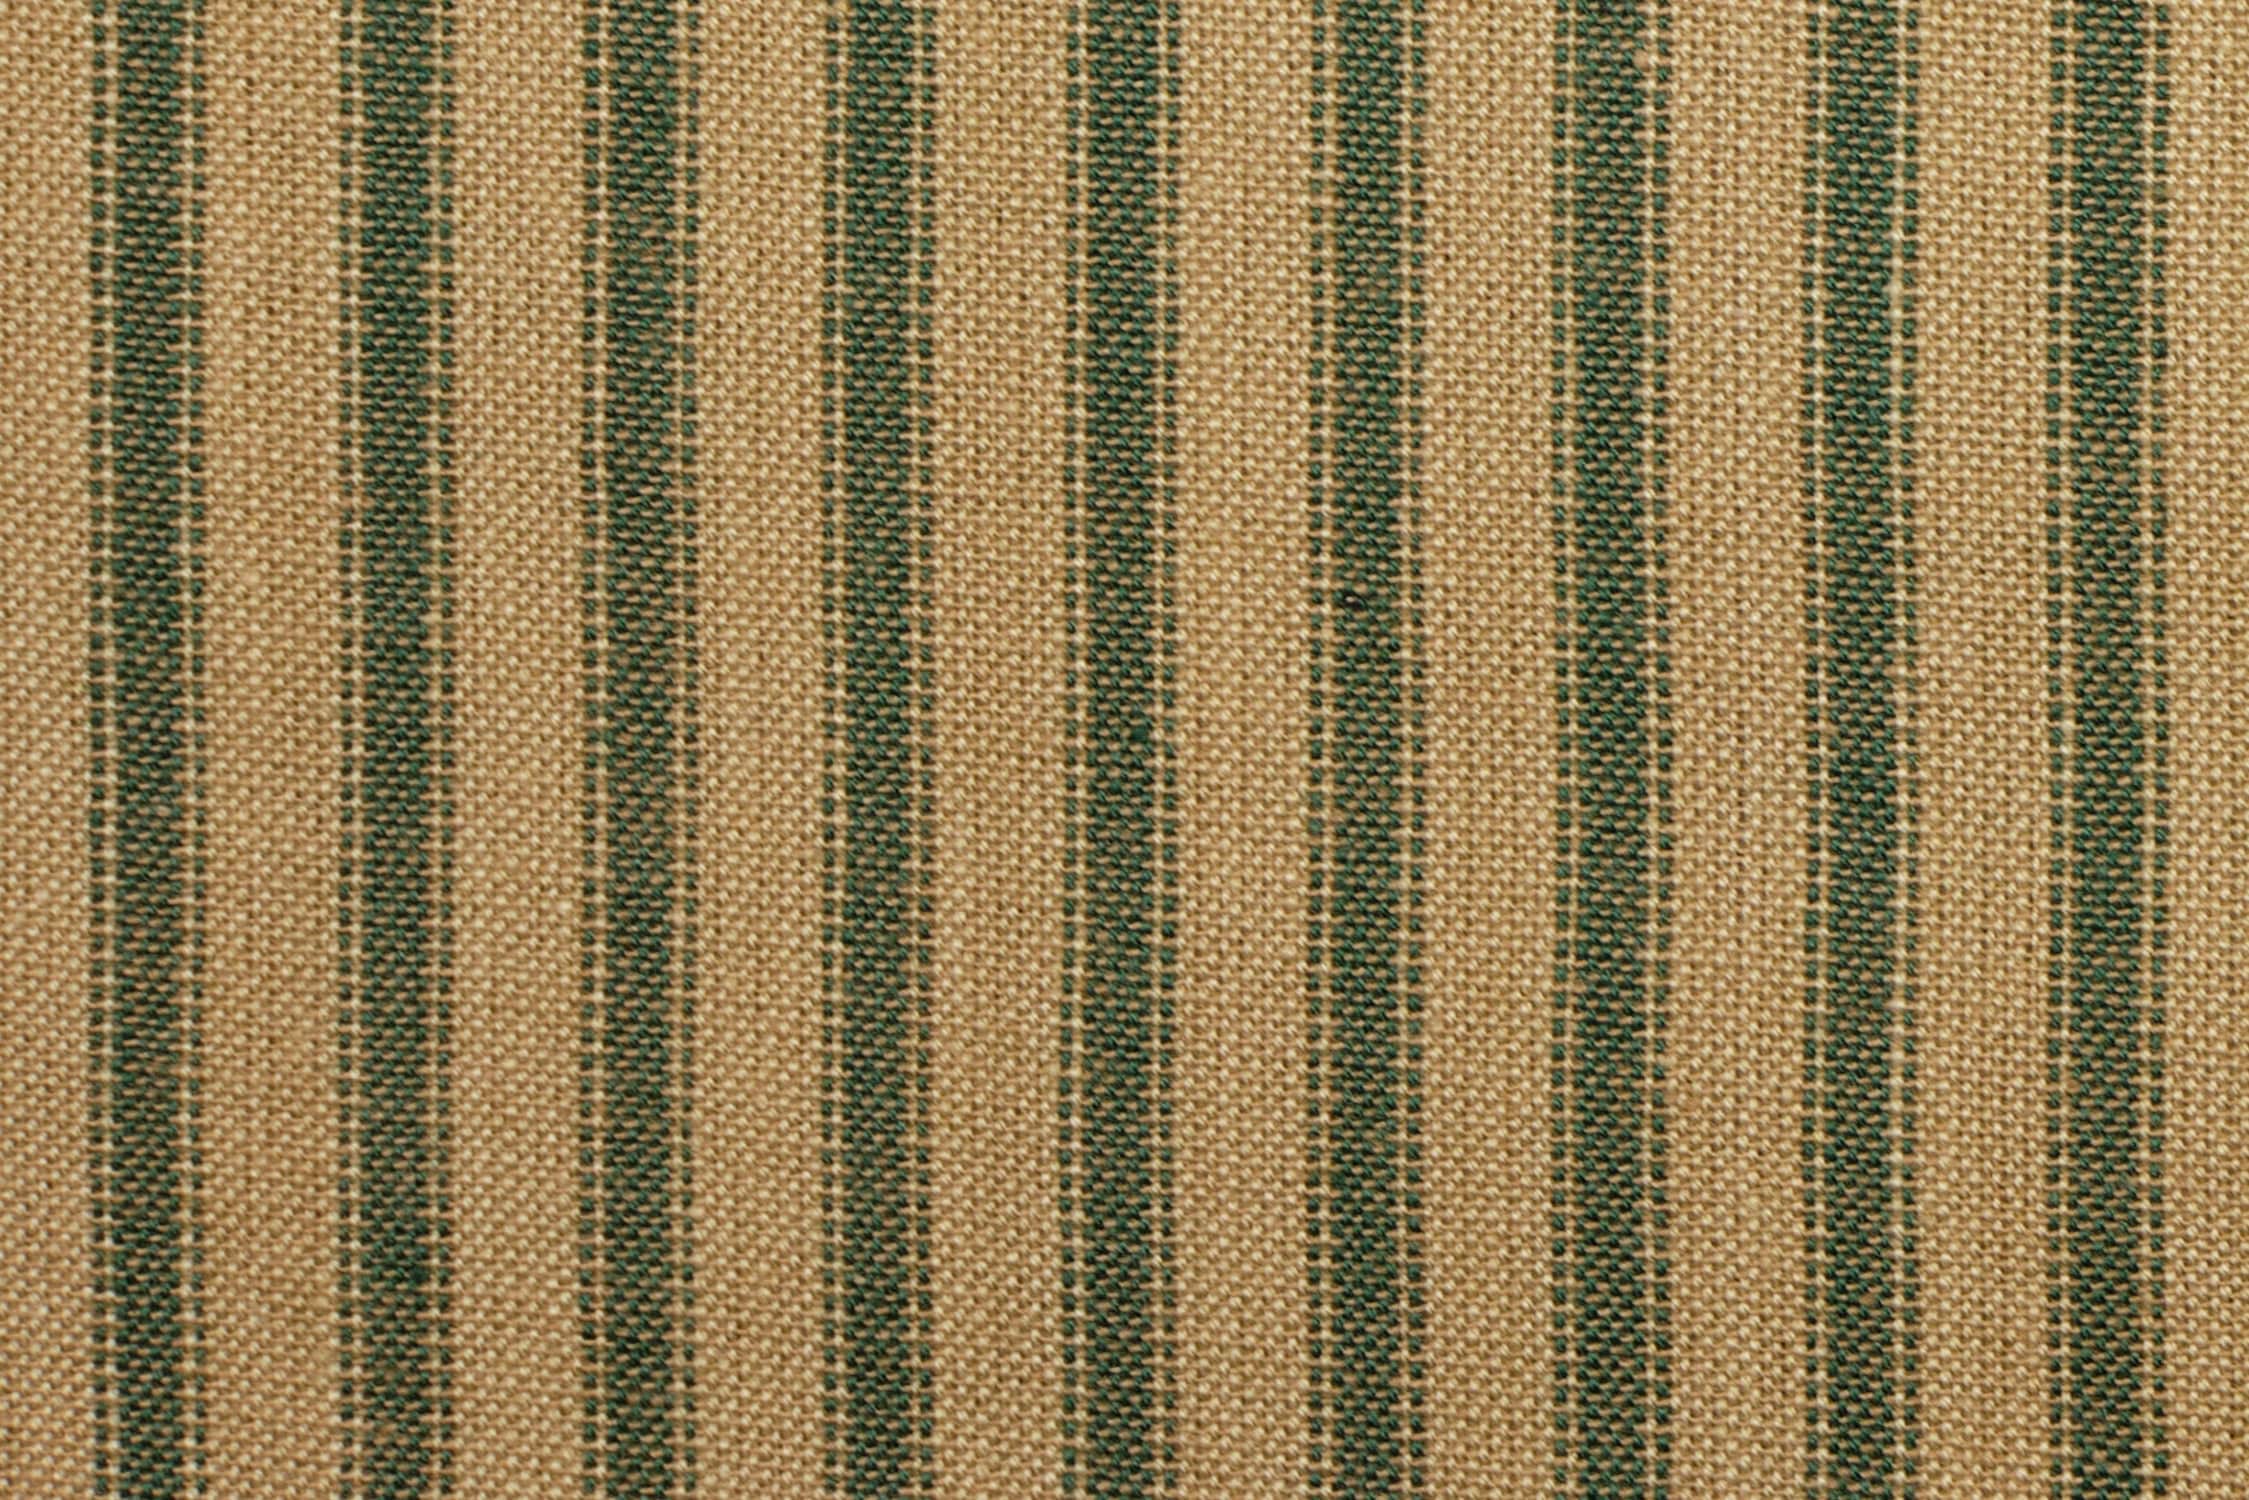  Roc-lon 100% 44/45 Cotton Woven Ticking, Stripe Navy Cut by  Yard